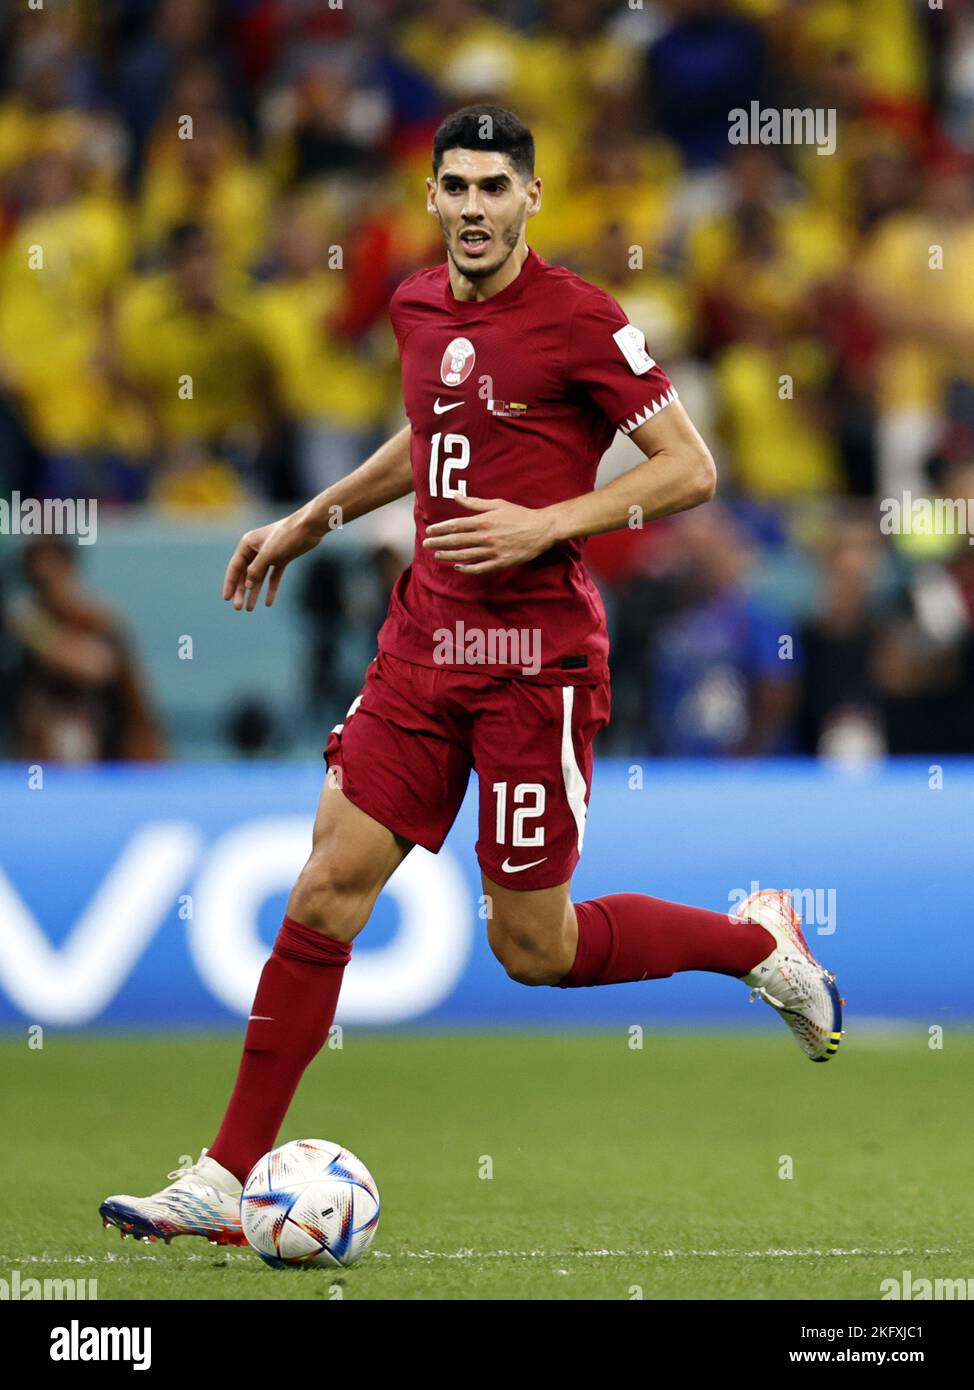 AL KHOR - Karim Boudiaf of Qatar during the FIFA World Cup Qatar 2022 group A match between Qatar and Ecuador at Al Bayt Stadium on November 20, 2022 in Al Khor, Qatar. AP | Dutch Height | MAURICE OF STONE Stock Photo